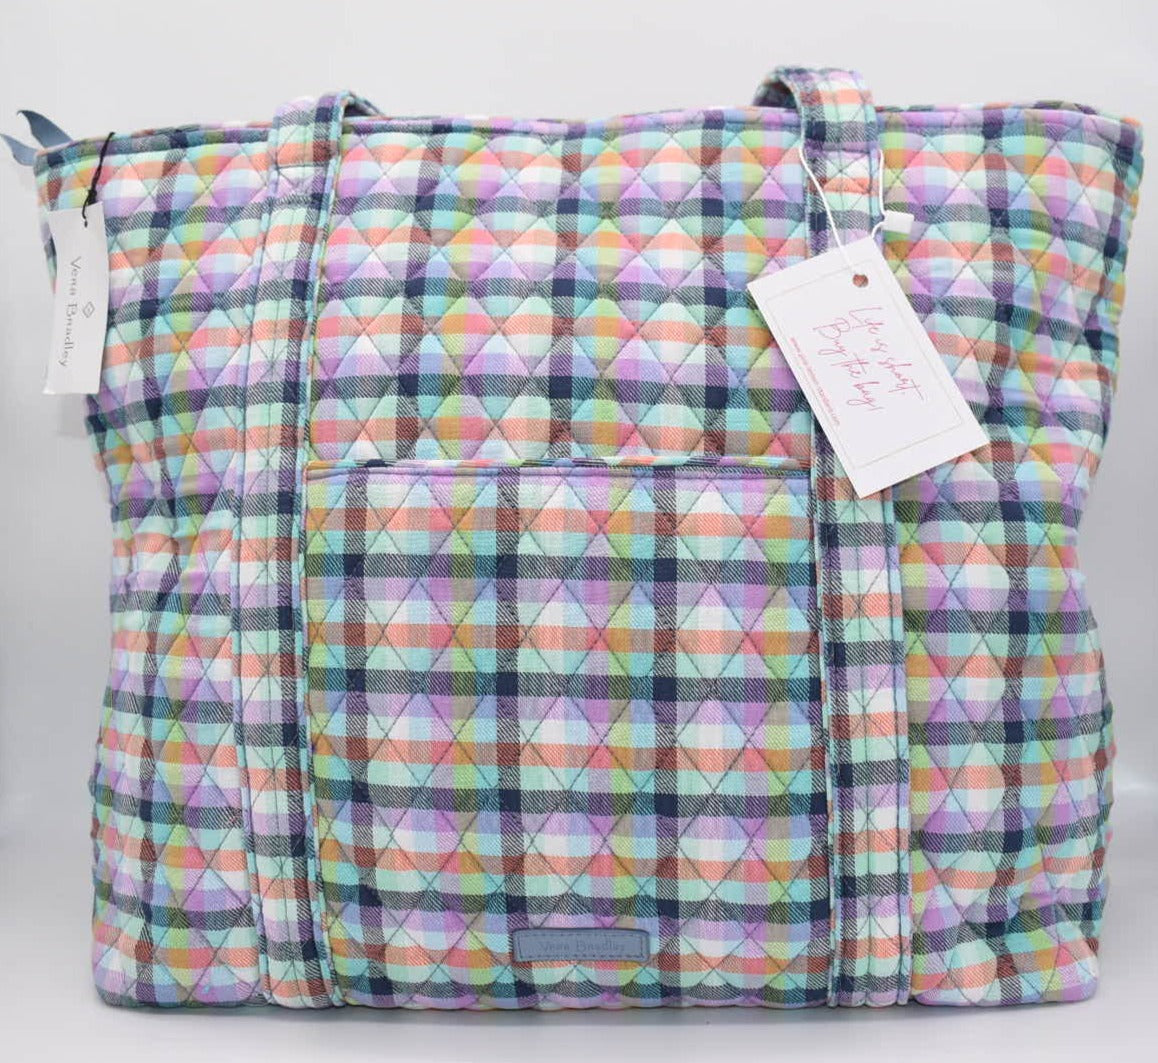 Vera Bradley Large Vera Tote Bag in "Gingham Plaid" Pattern